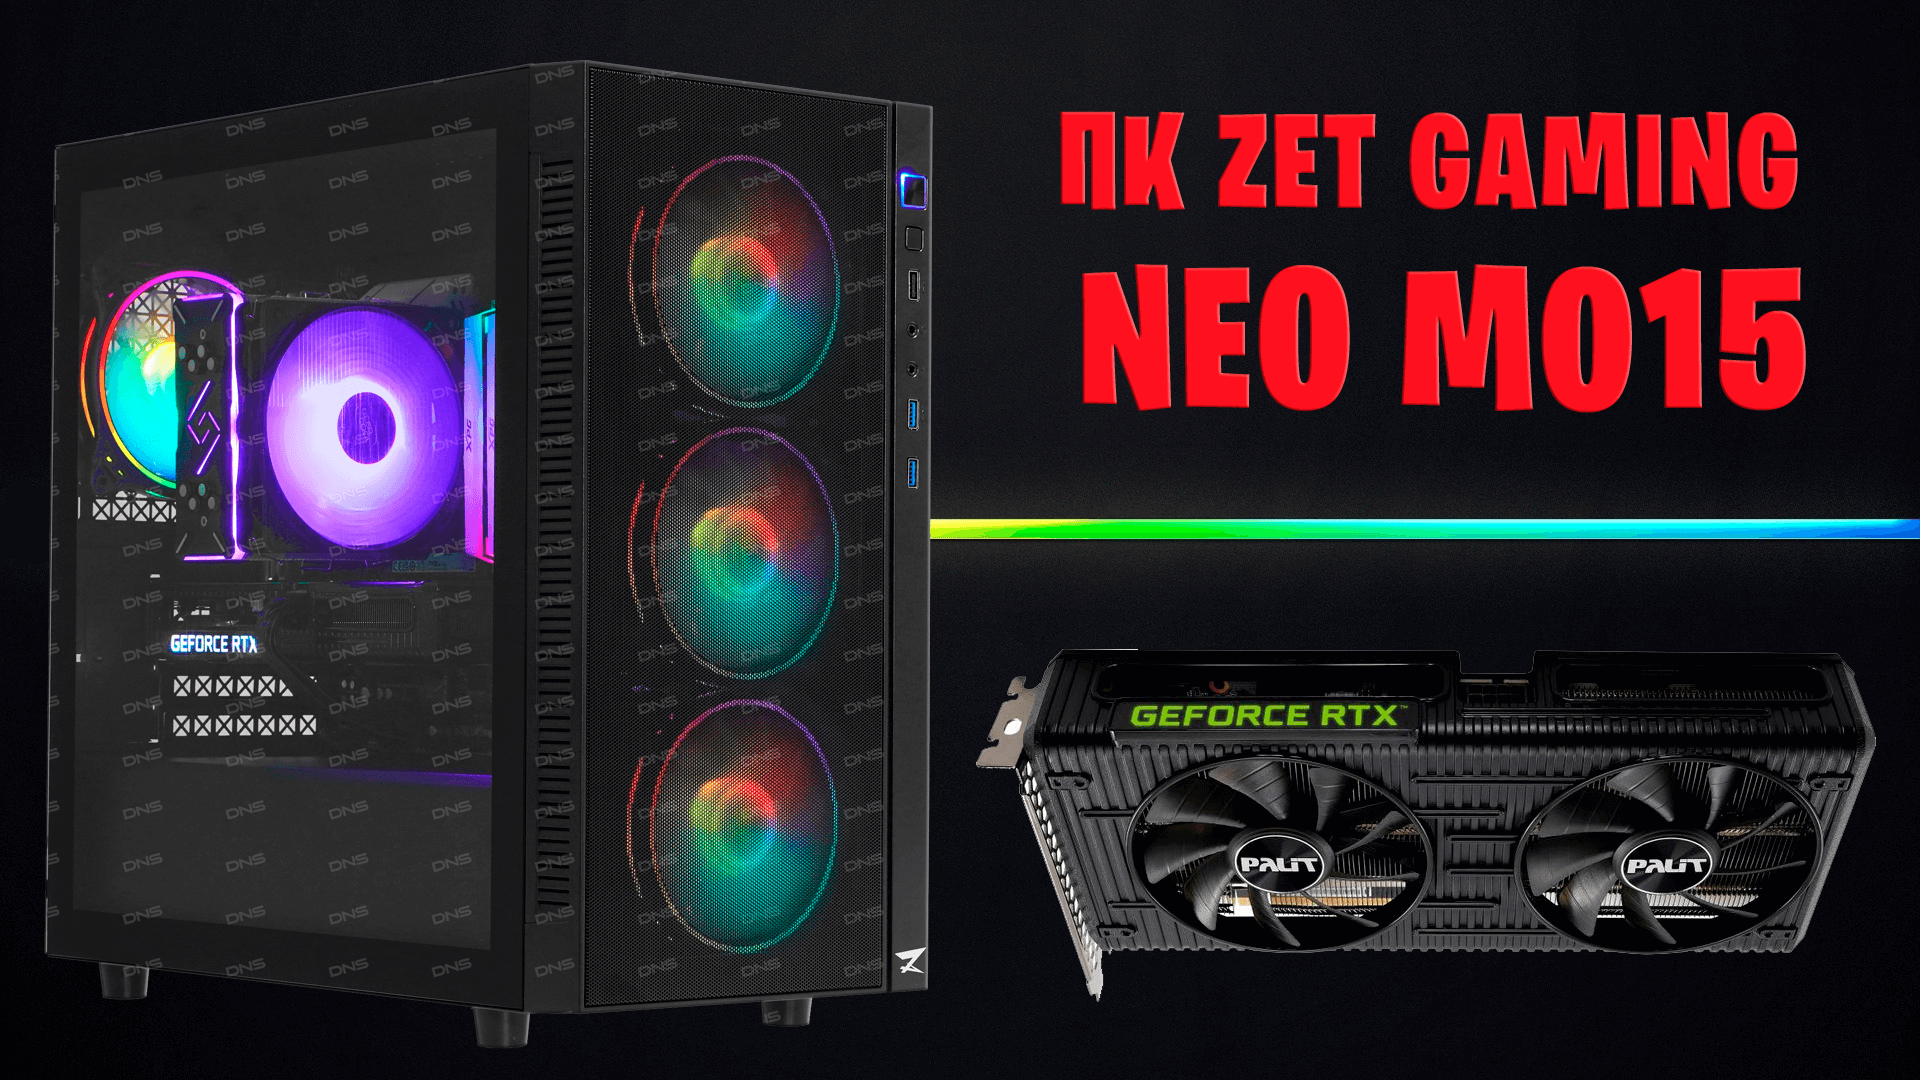 Zet gaming ultra. ПК zet Gaming Neo. ПК zet Gaming Neo m061. Zet Gaming Neo m006. Zet Gaming Neo m008.